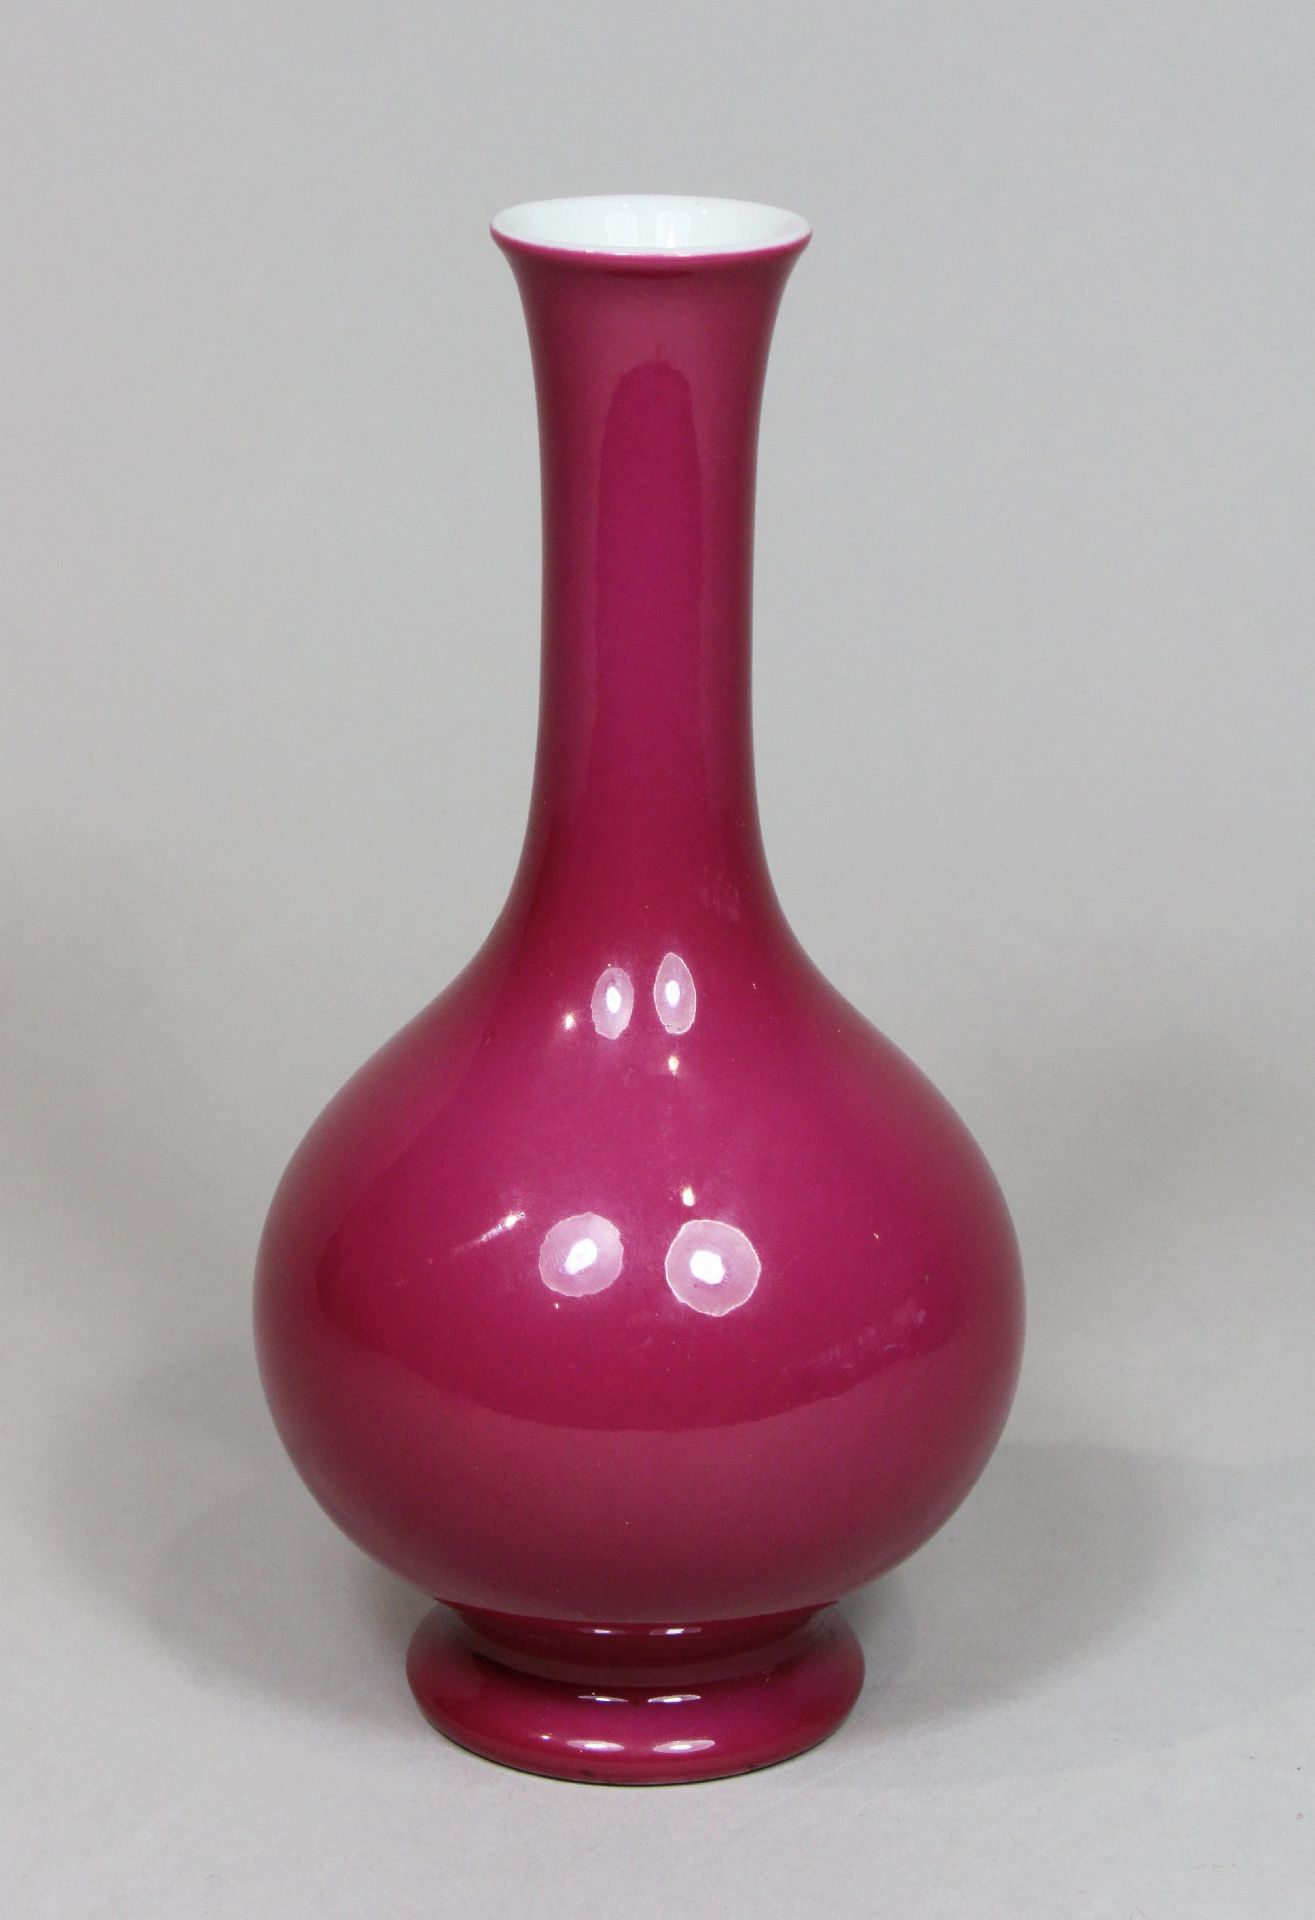 Tianqiuping Vase, China, Porzellan, wohl Qianlong Marke, rosa Glasur. H.: 16,2 cm. Guter, altersbed